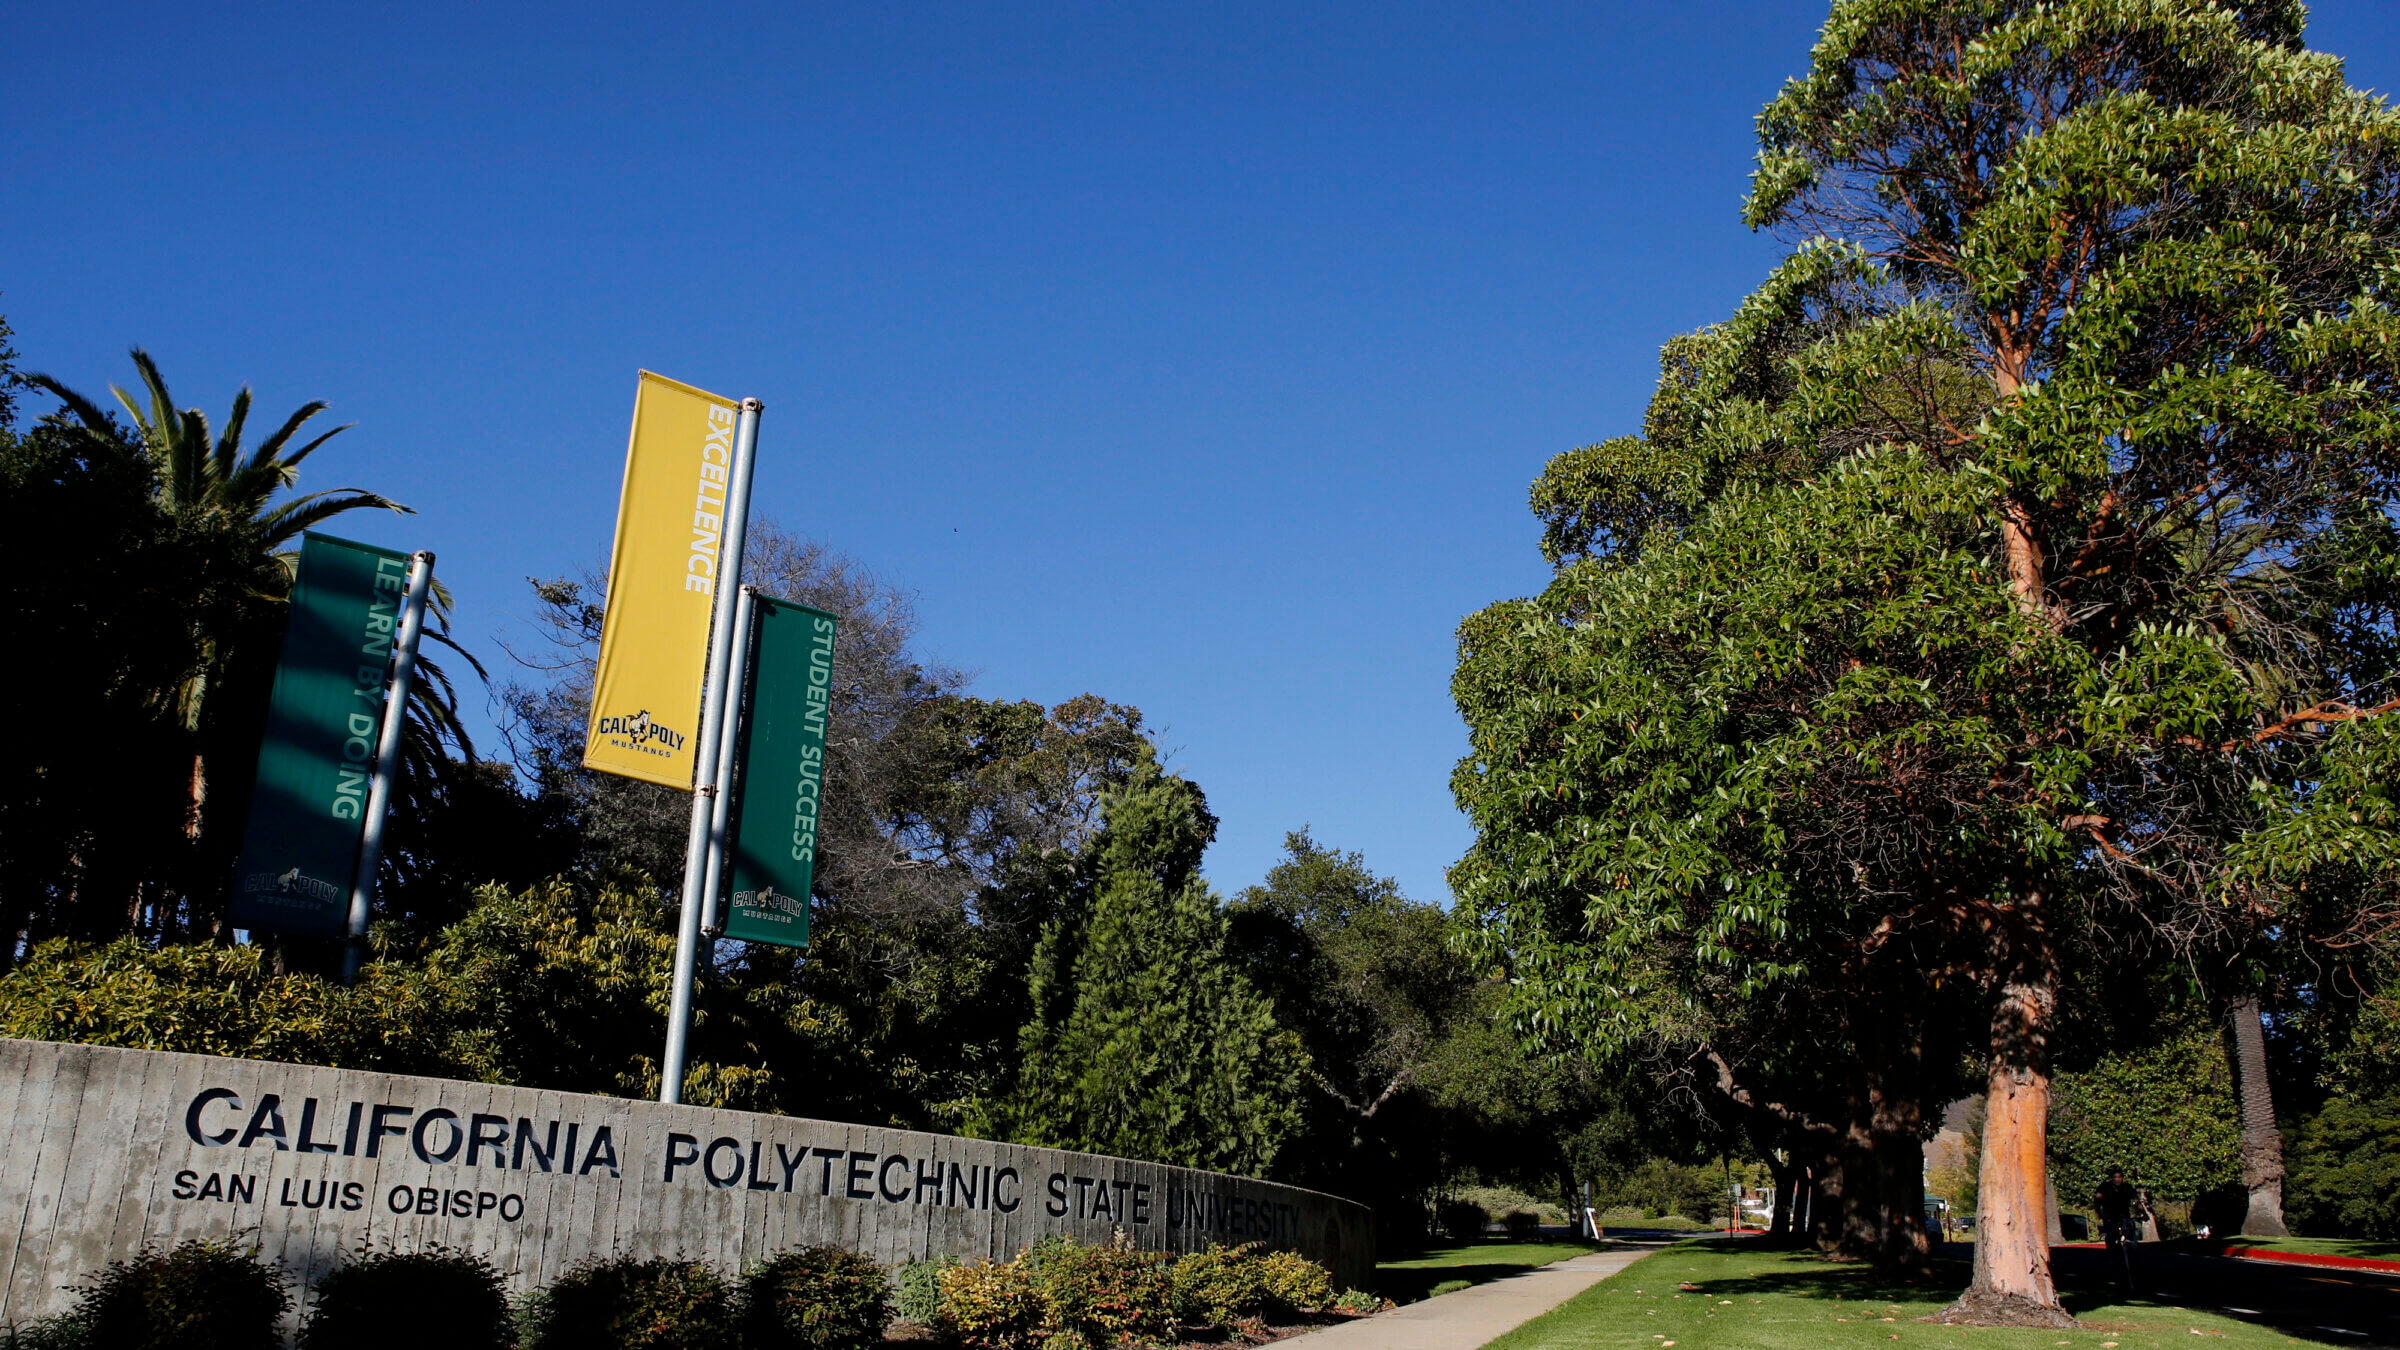 The campus of California Polytechnic State University San Luis Obispo.